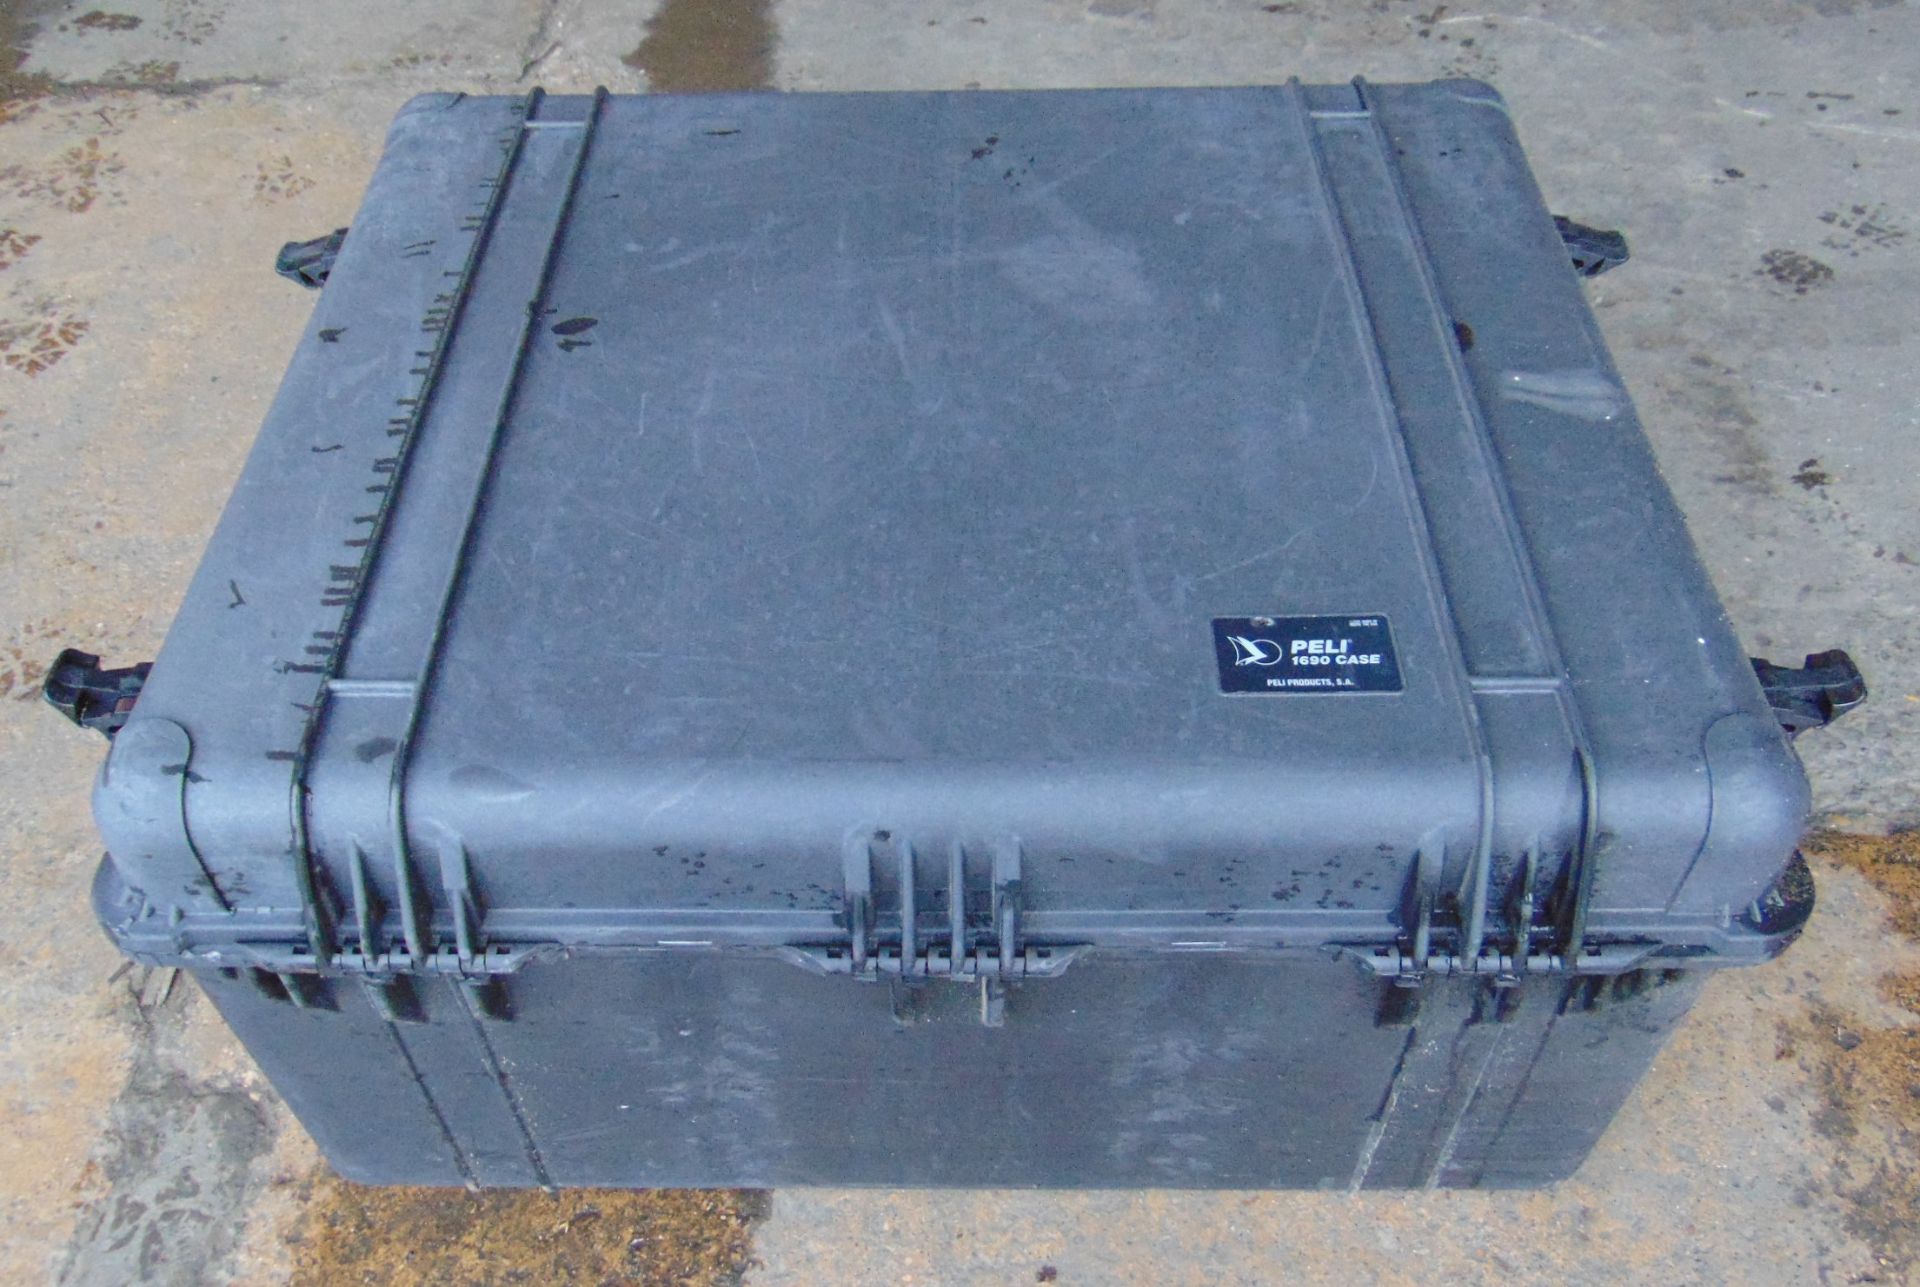 Peli 1690 Protector Transport Case - Image 3 of 20